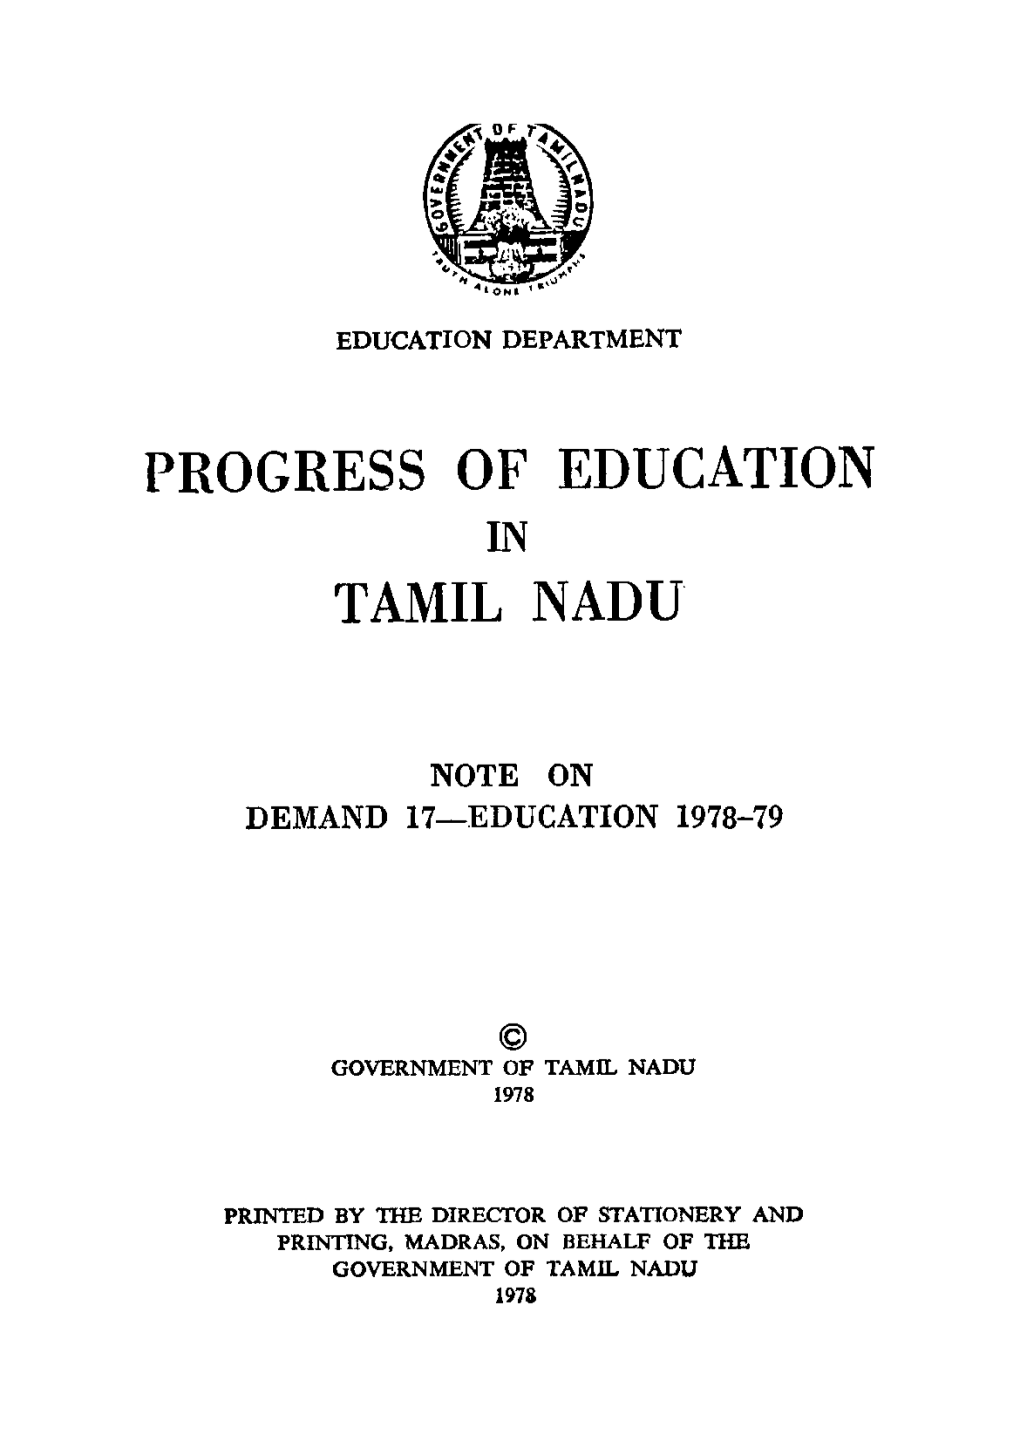 Progress of Education Tamil Nadu